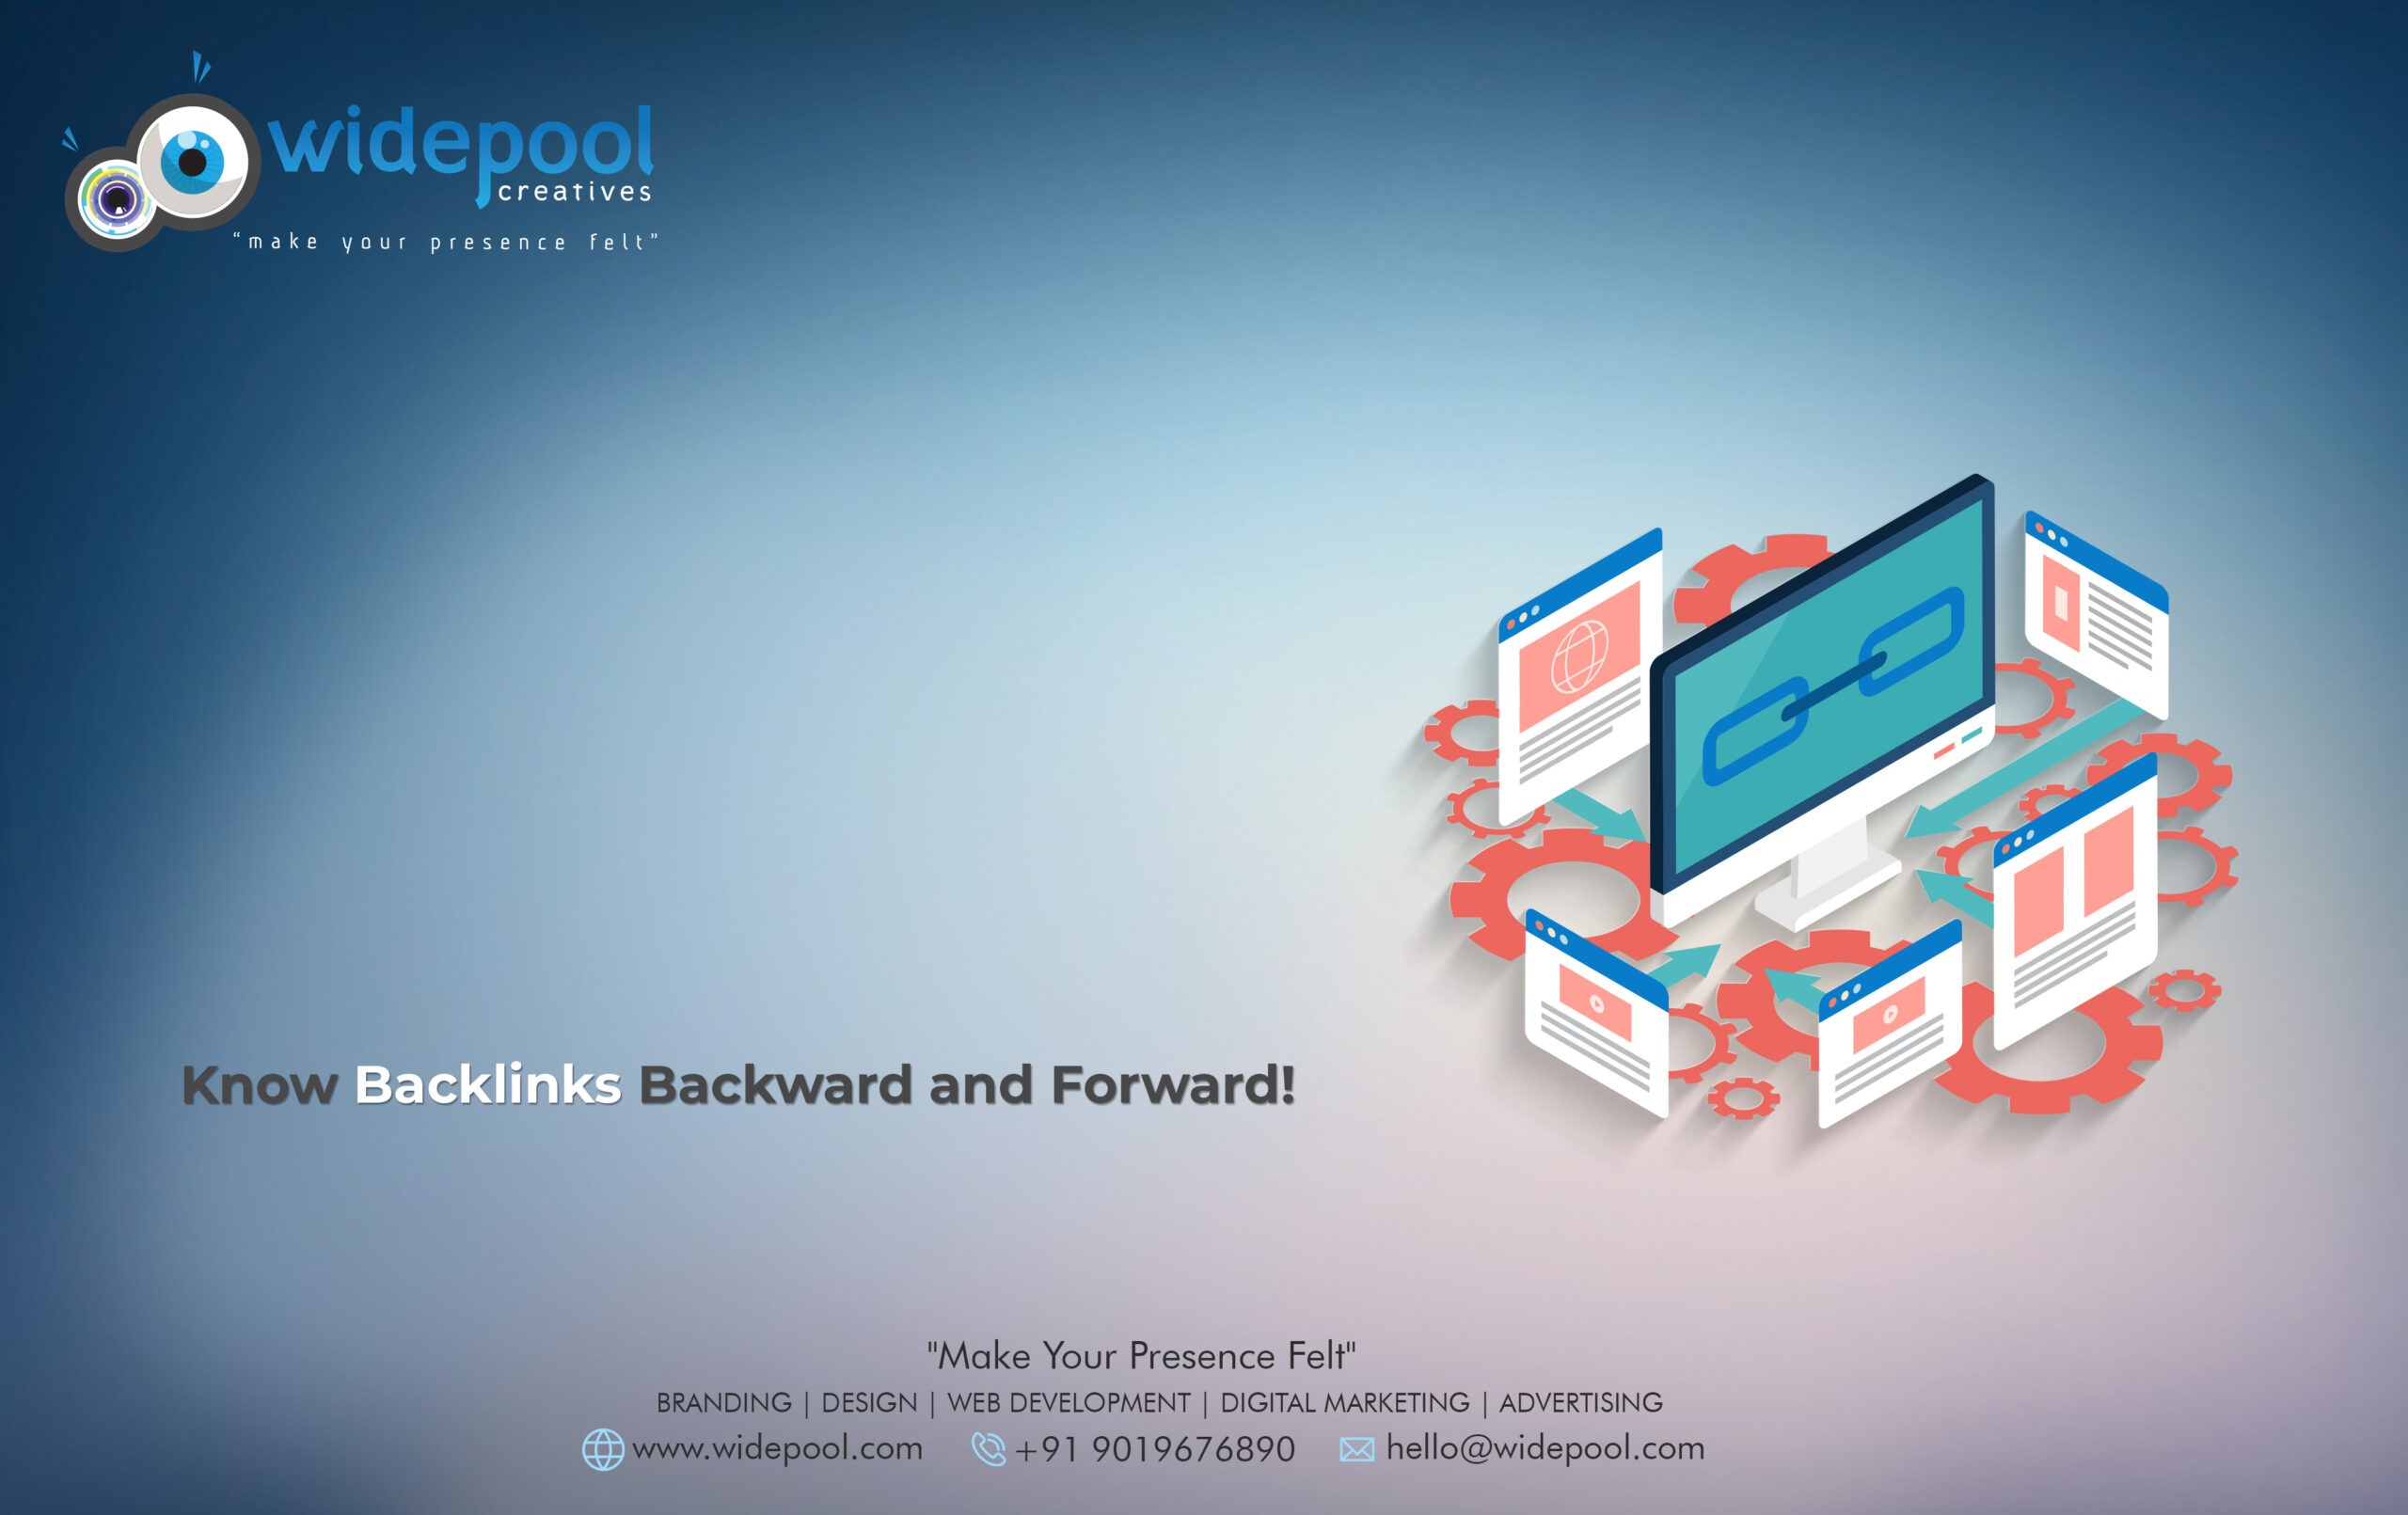 Know Backlinks Backward and Forward!